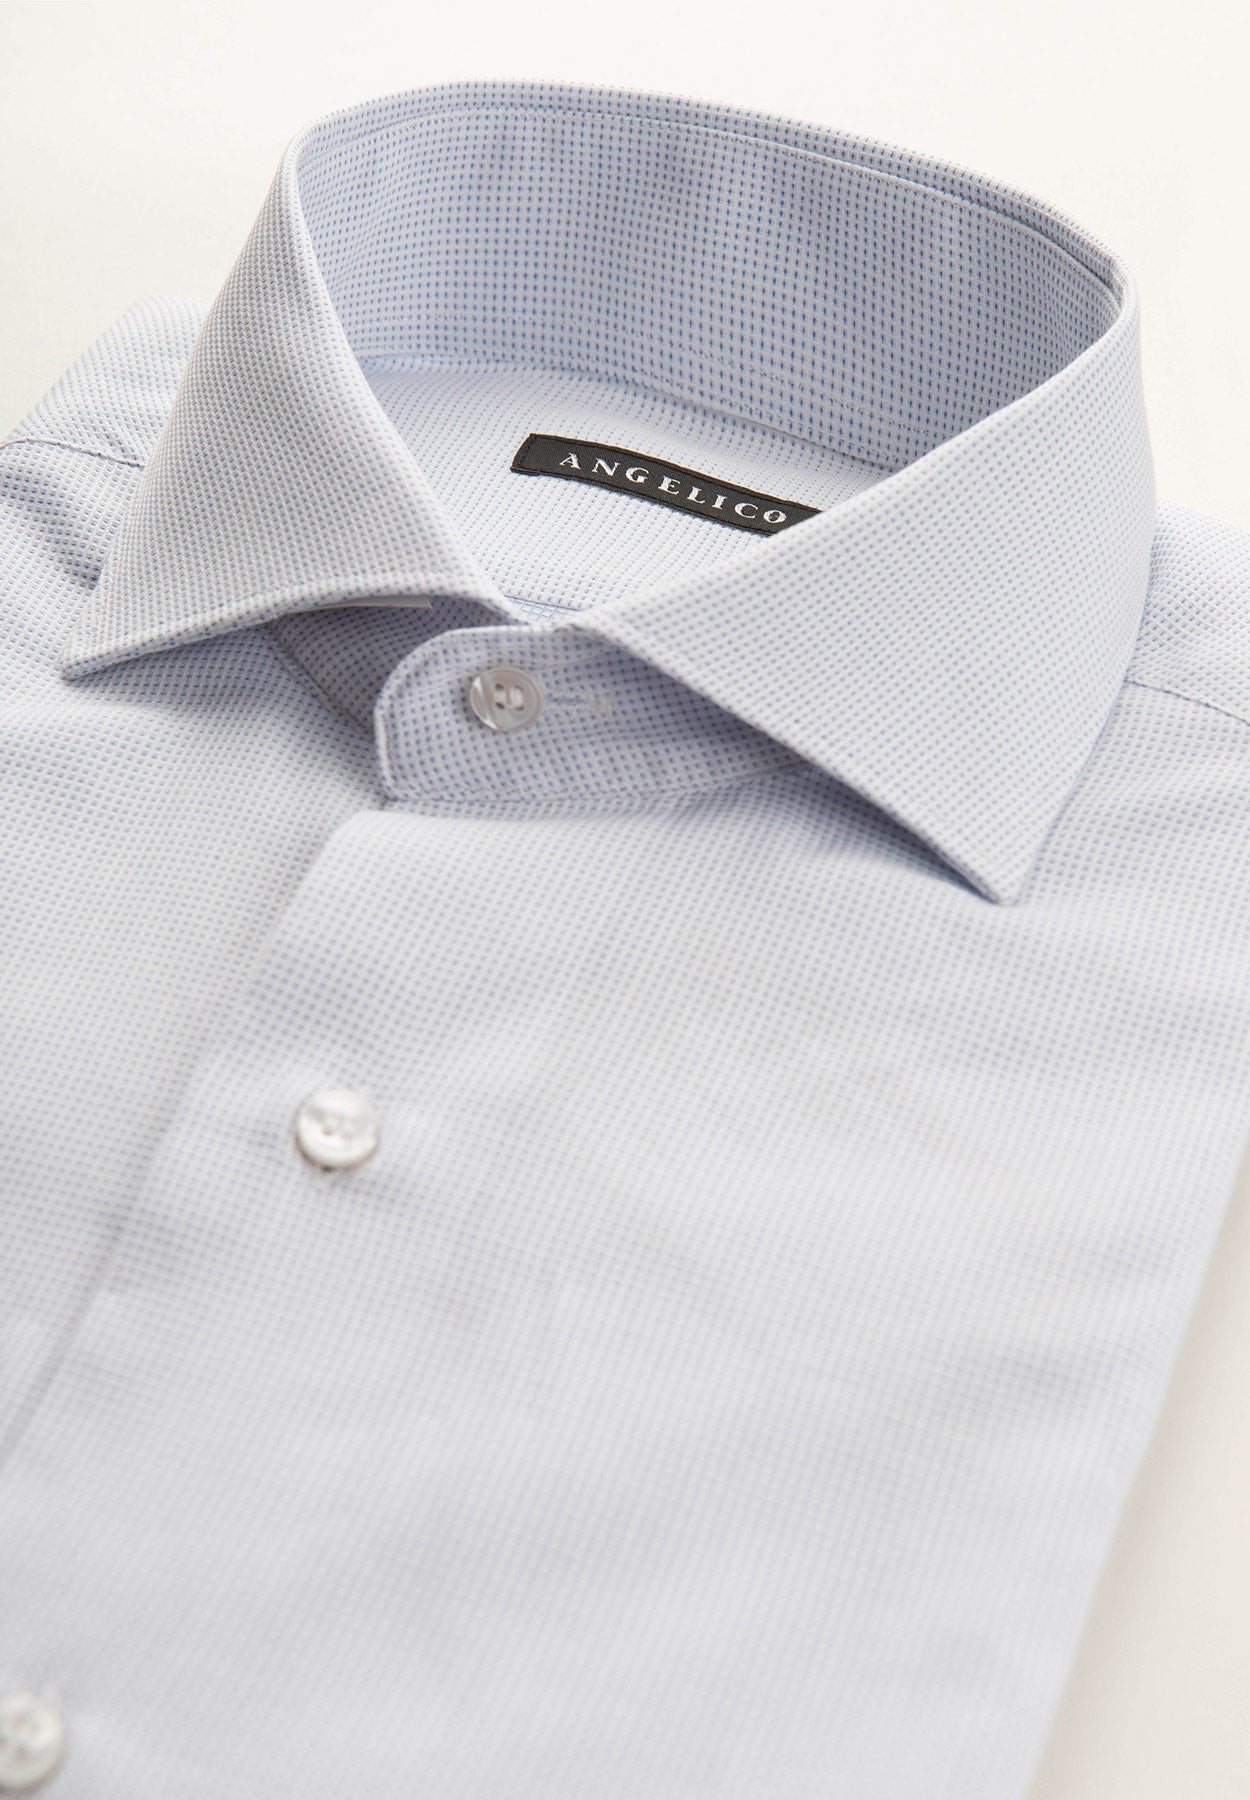 White shirt micro pattern light blue cotton slim fit